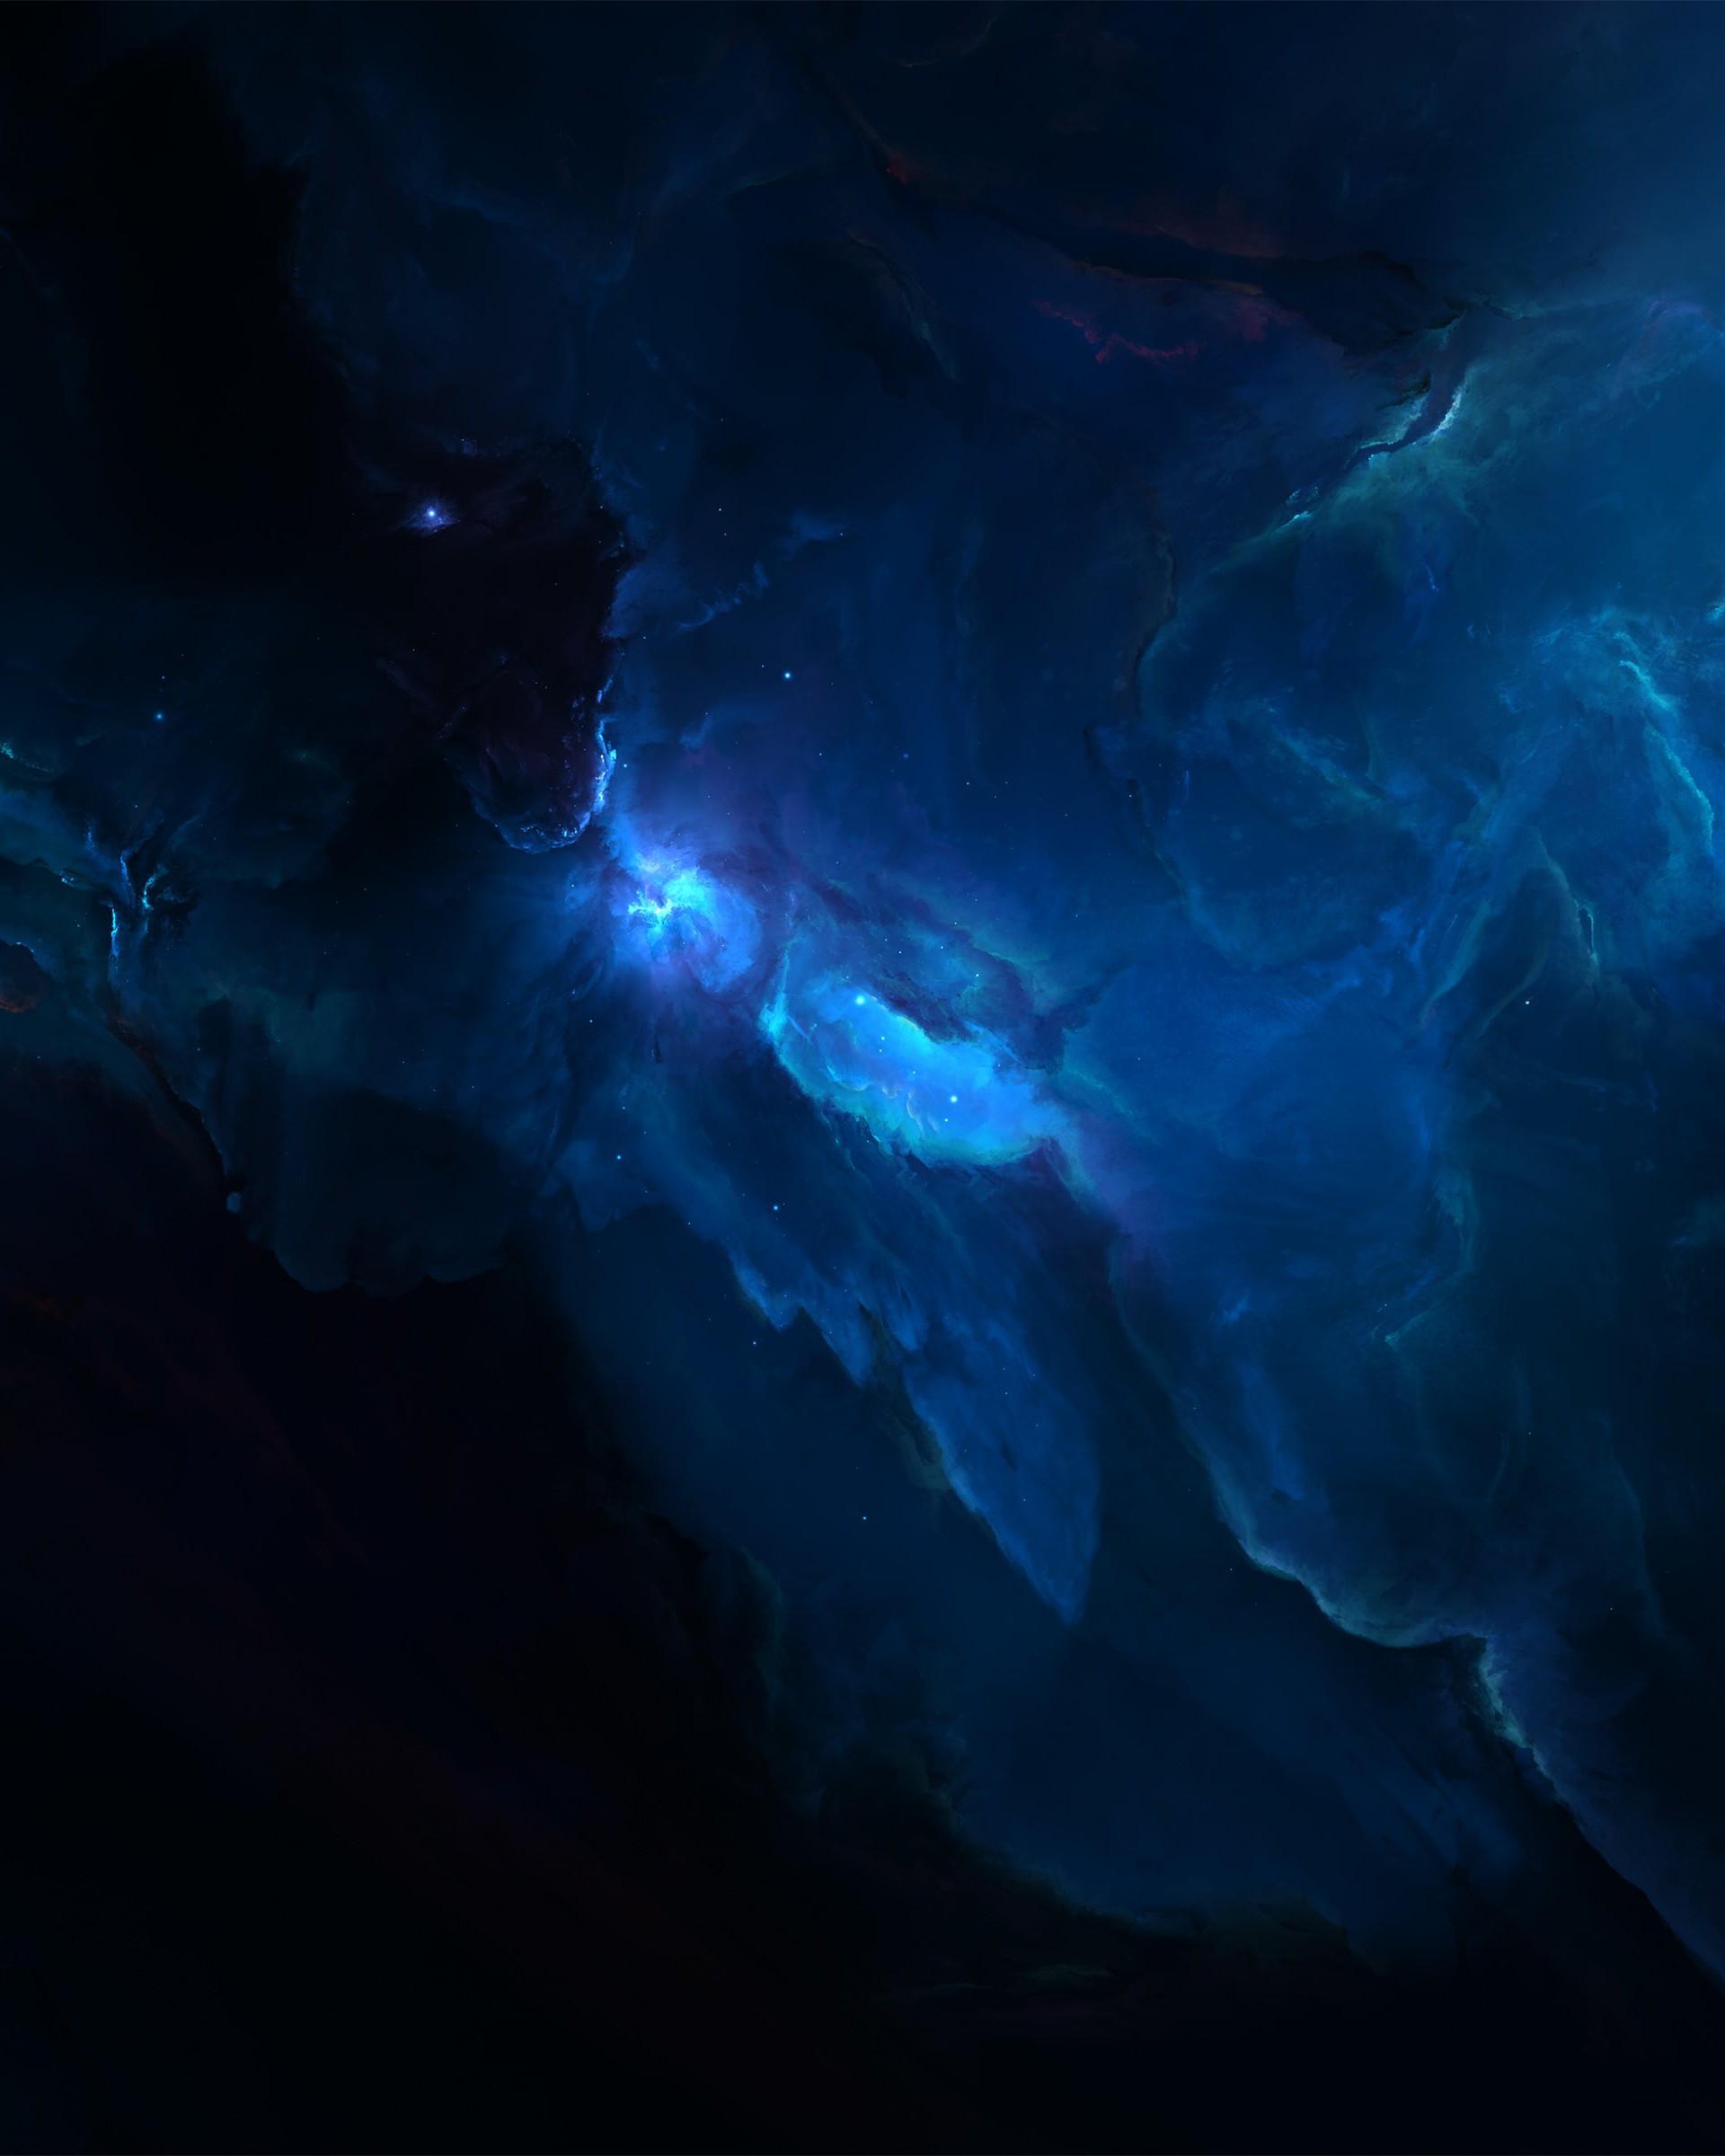 Atlantis Labyrinth Nebula Wallpaper for Google Nexus 7